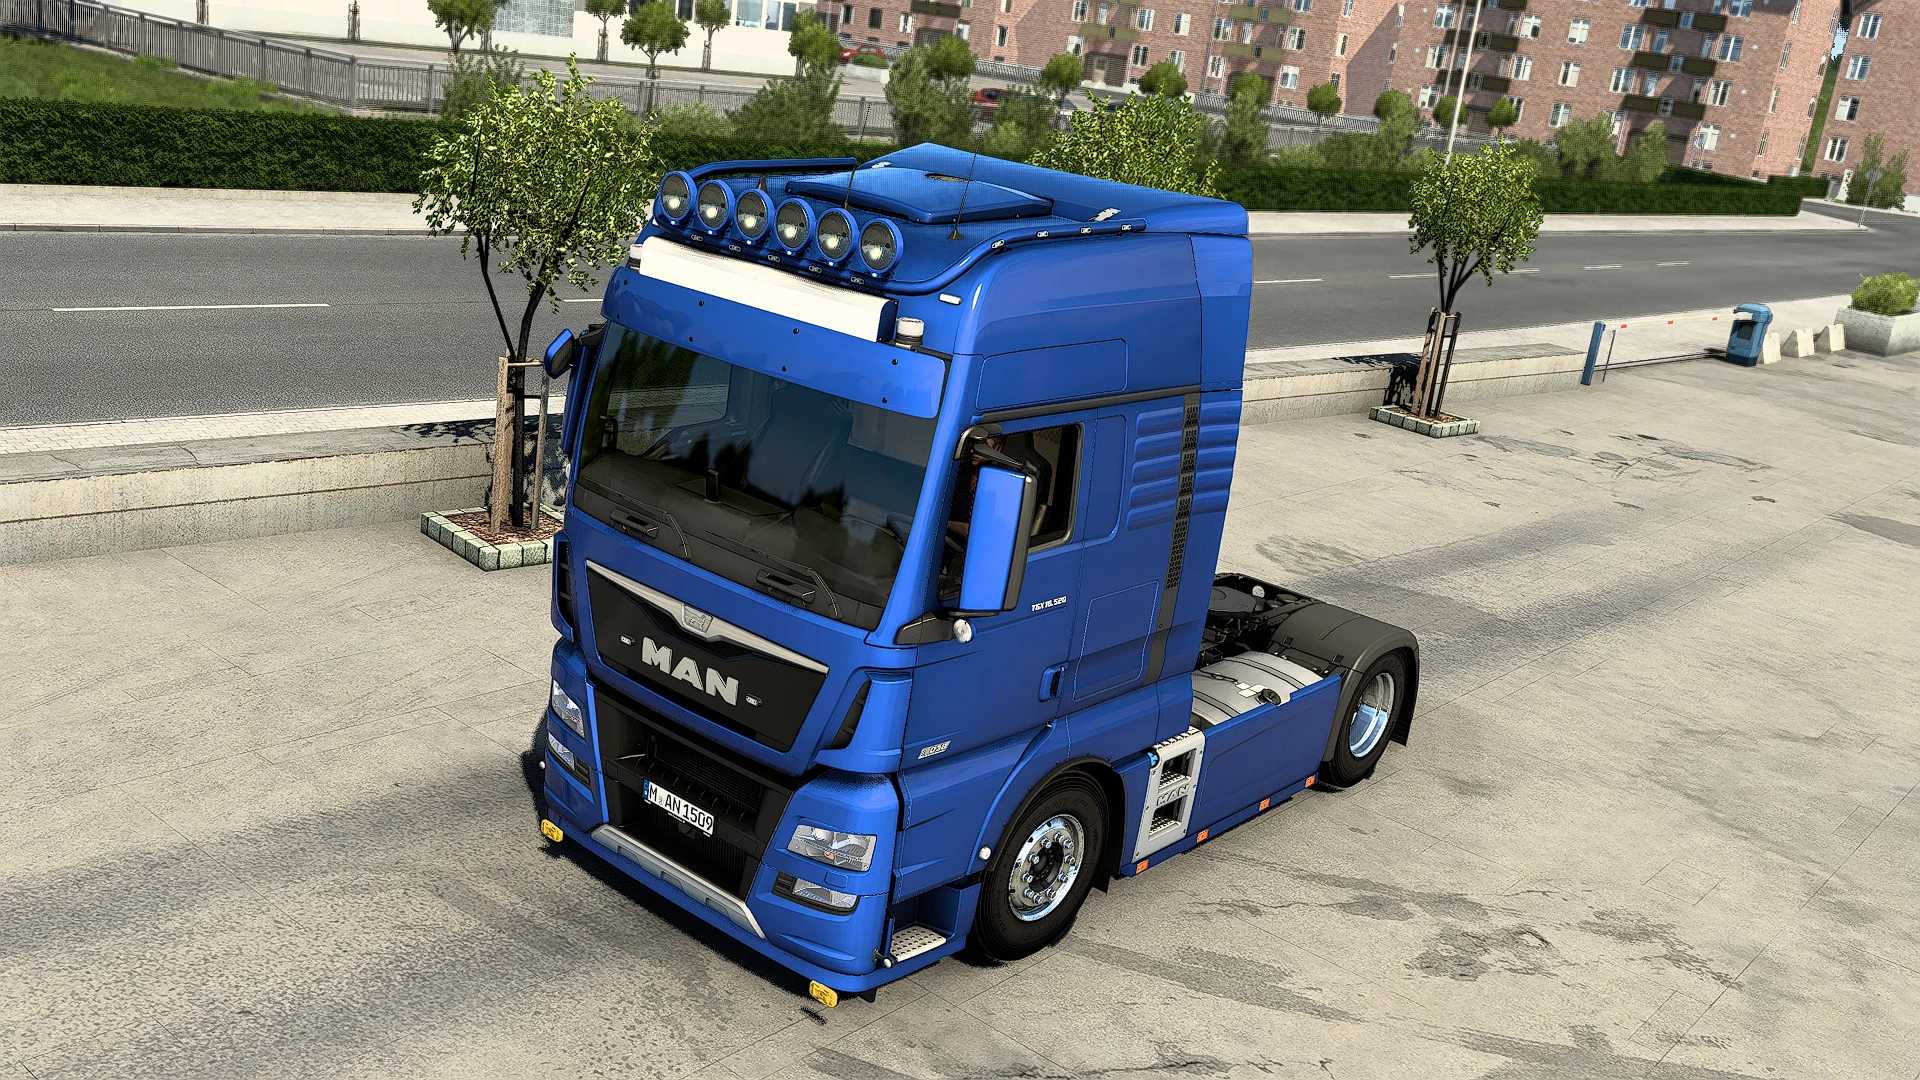 Man Tgx E6 2015 By Gloover V13 142 143 Ets2 Euro Truck Simulator 2 Mods American Truck 4120